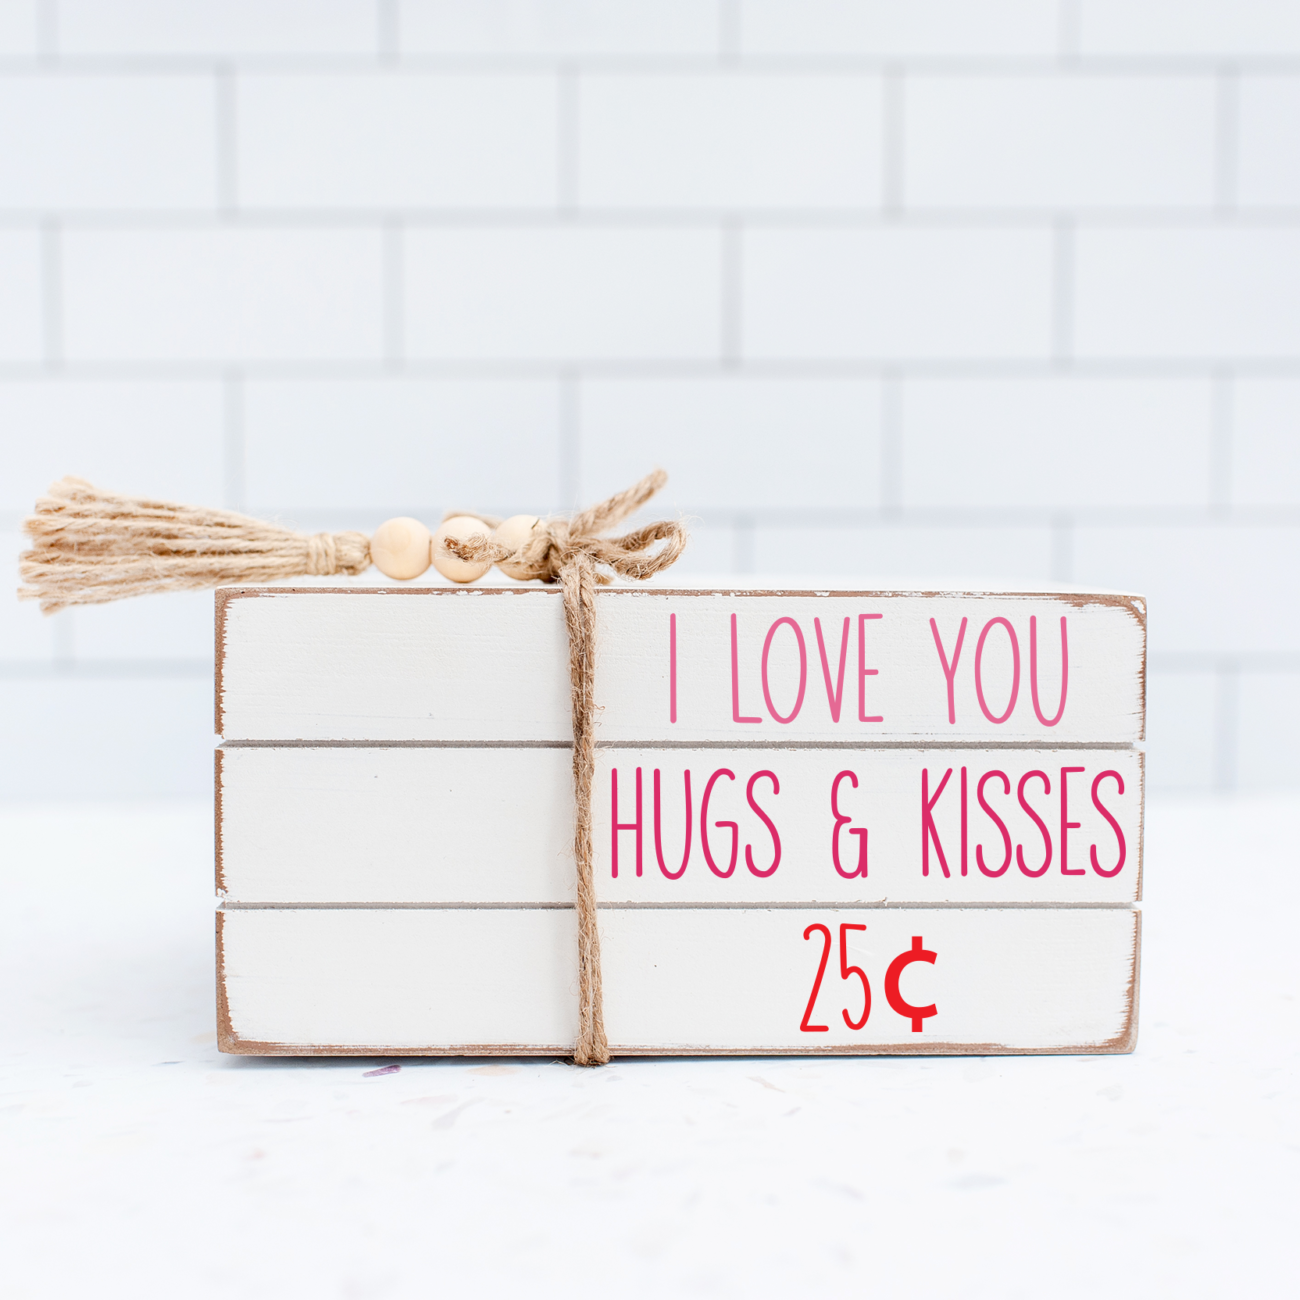 rolling-pin-pins-mini-honey-cuddle-hugs-and-kisses-love-shack-be-my-chocolate-valentine-stencil-reusable-silkscreen-mesh-adhesive-diy-craft-home-decor-magnolia-design-co